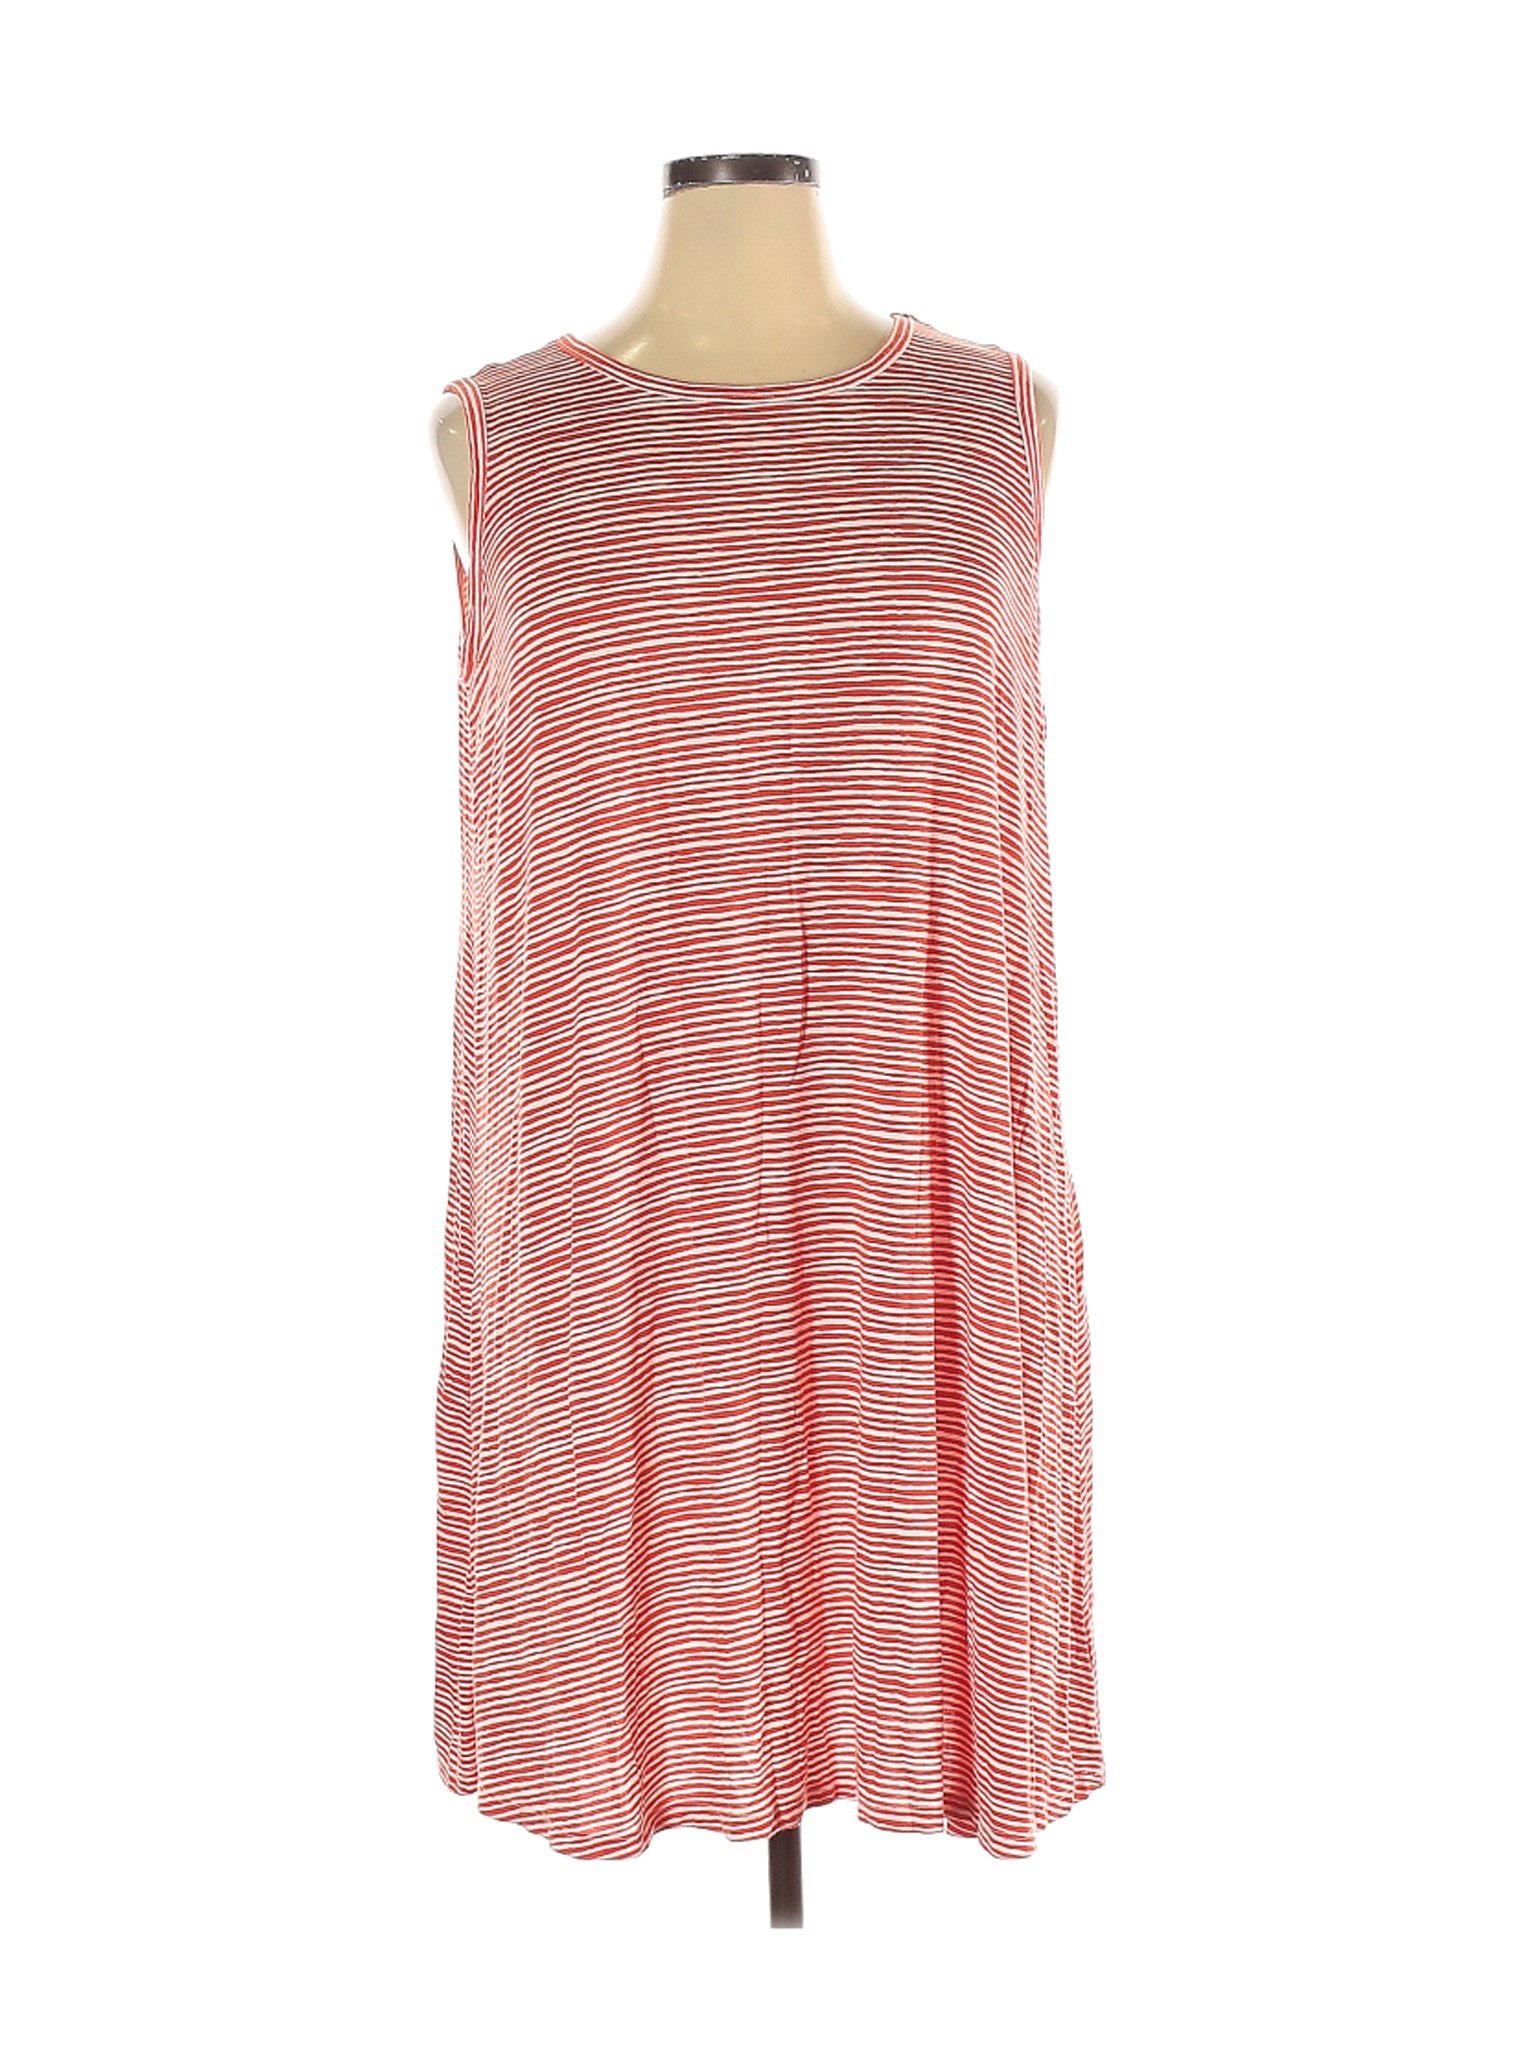 Philosophy Republic Clothing Women Pink Casual Dress 1X Plus | eBay